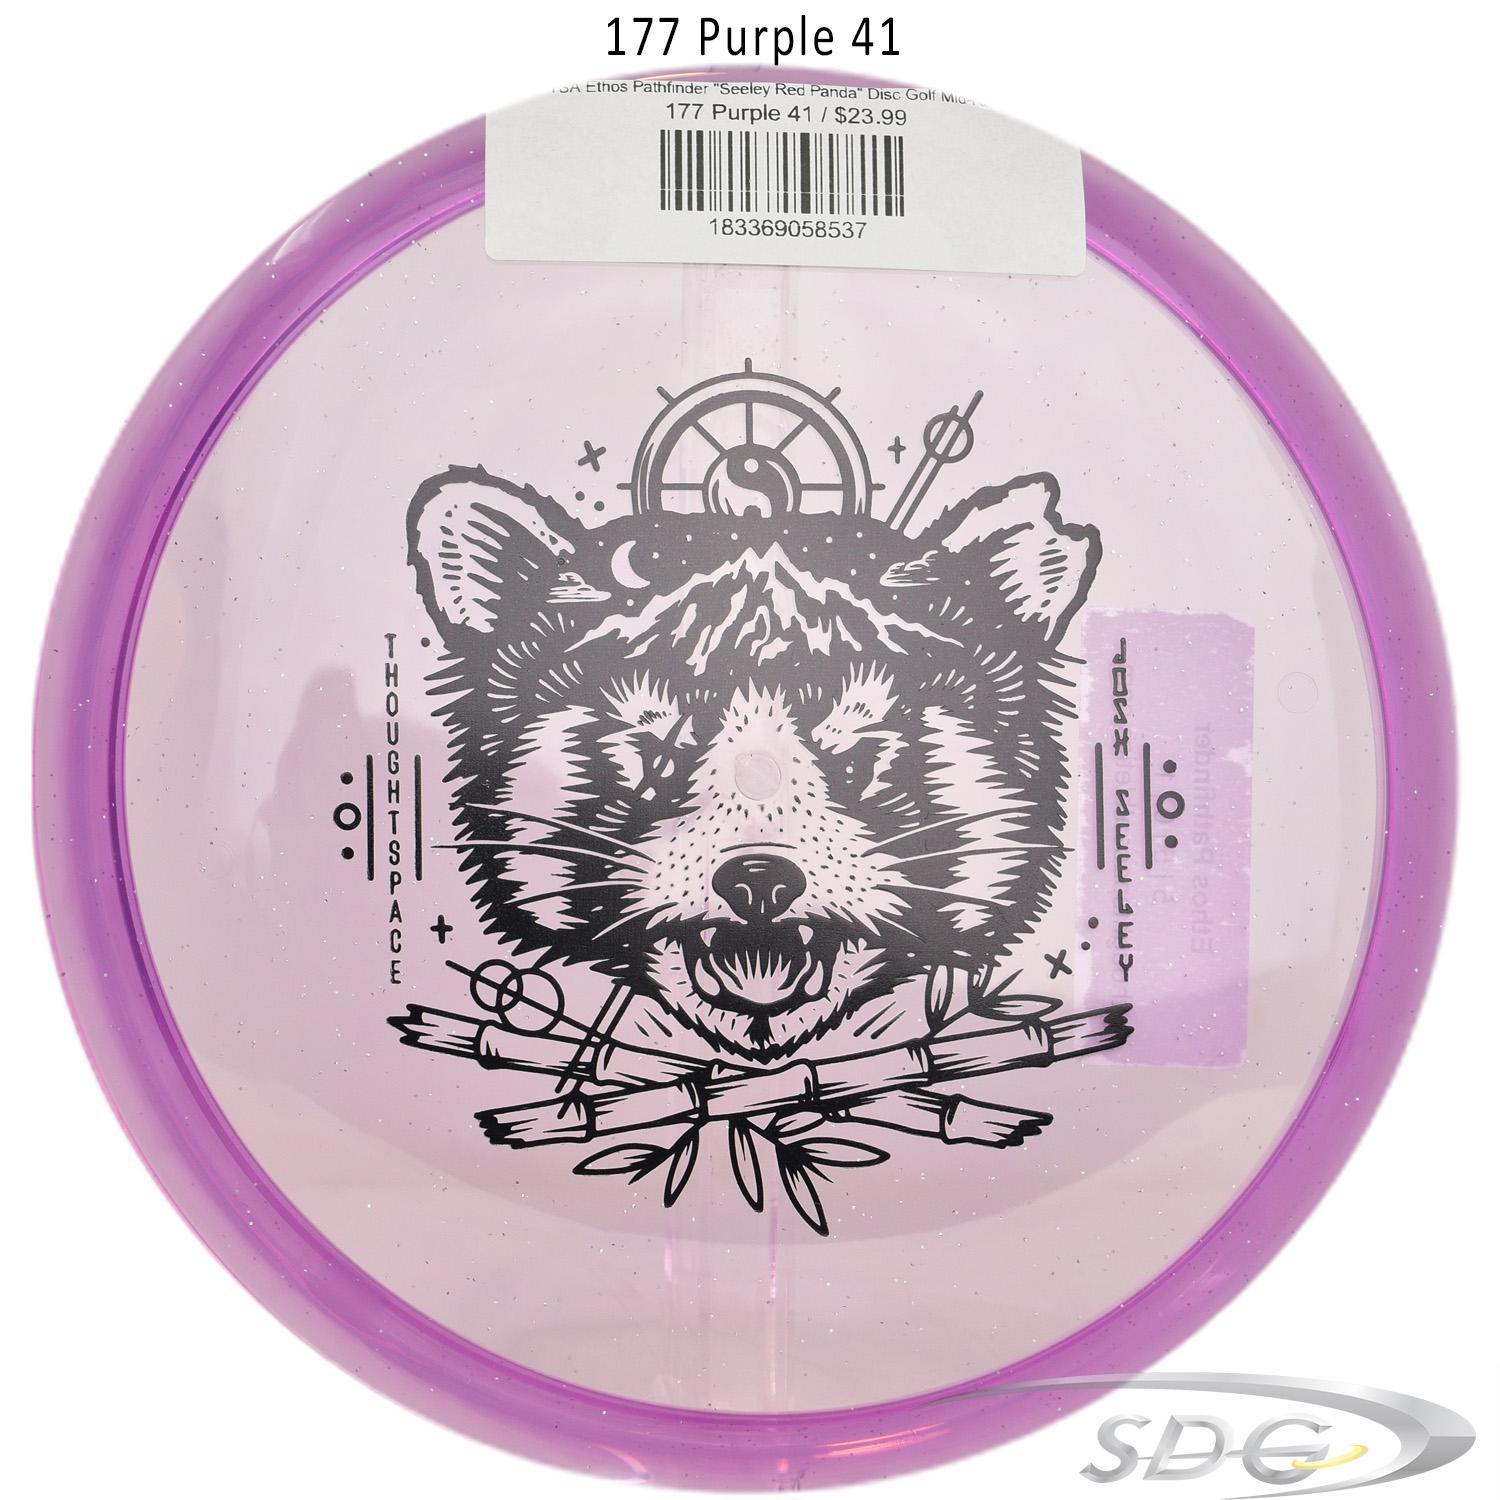 tsa-ethos-pathfinder-seeley-red-panda-disc-golf-mid-range 177 Purple 41 